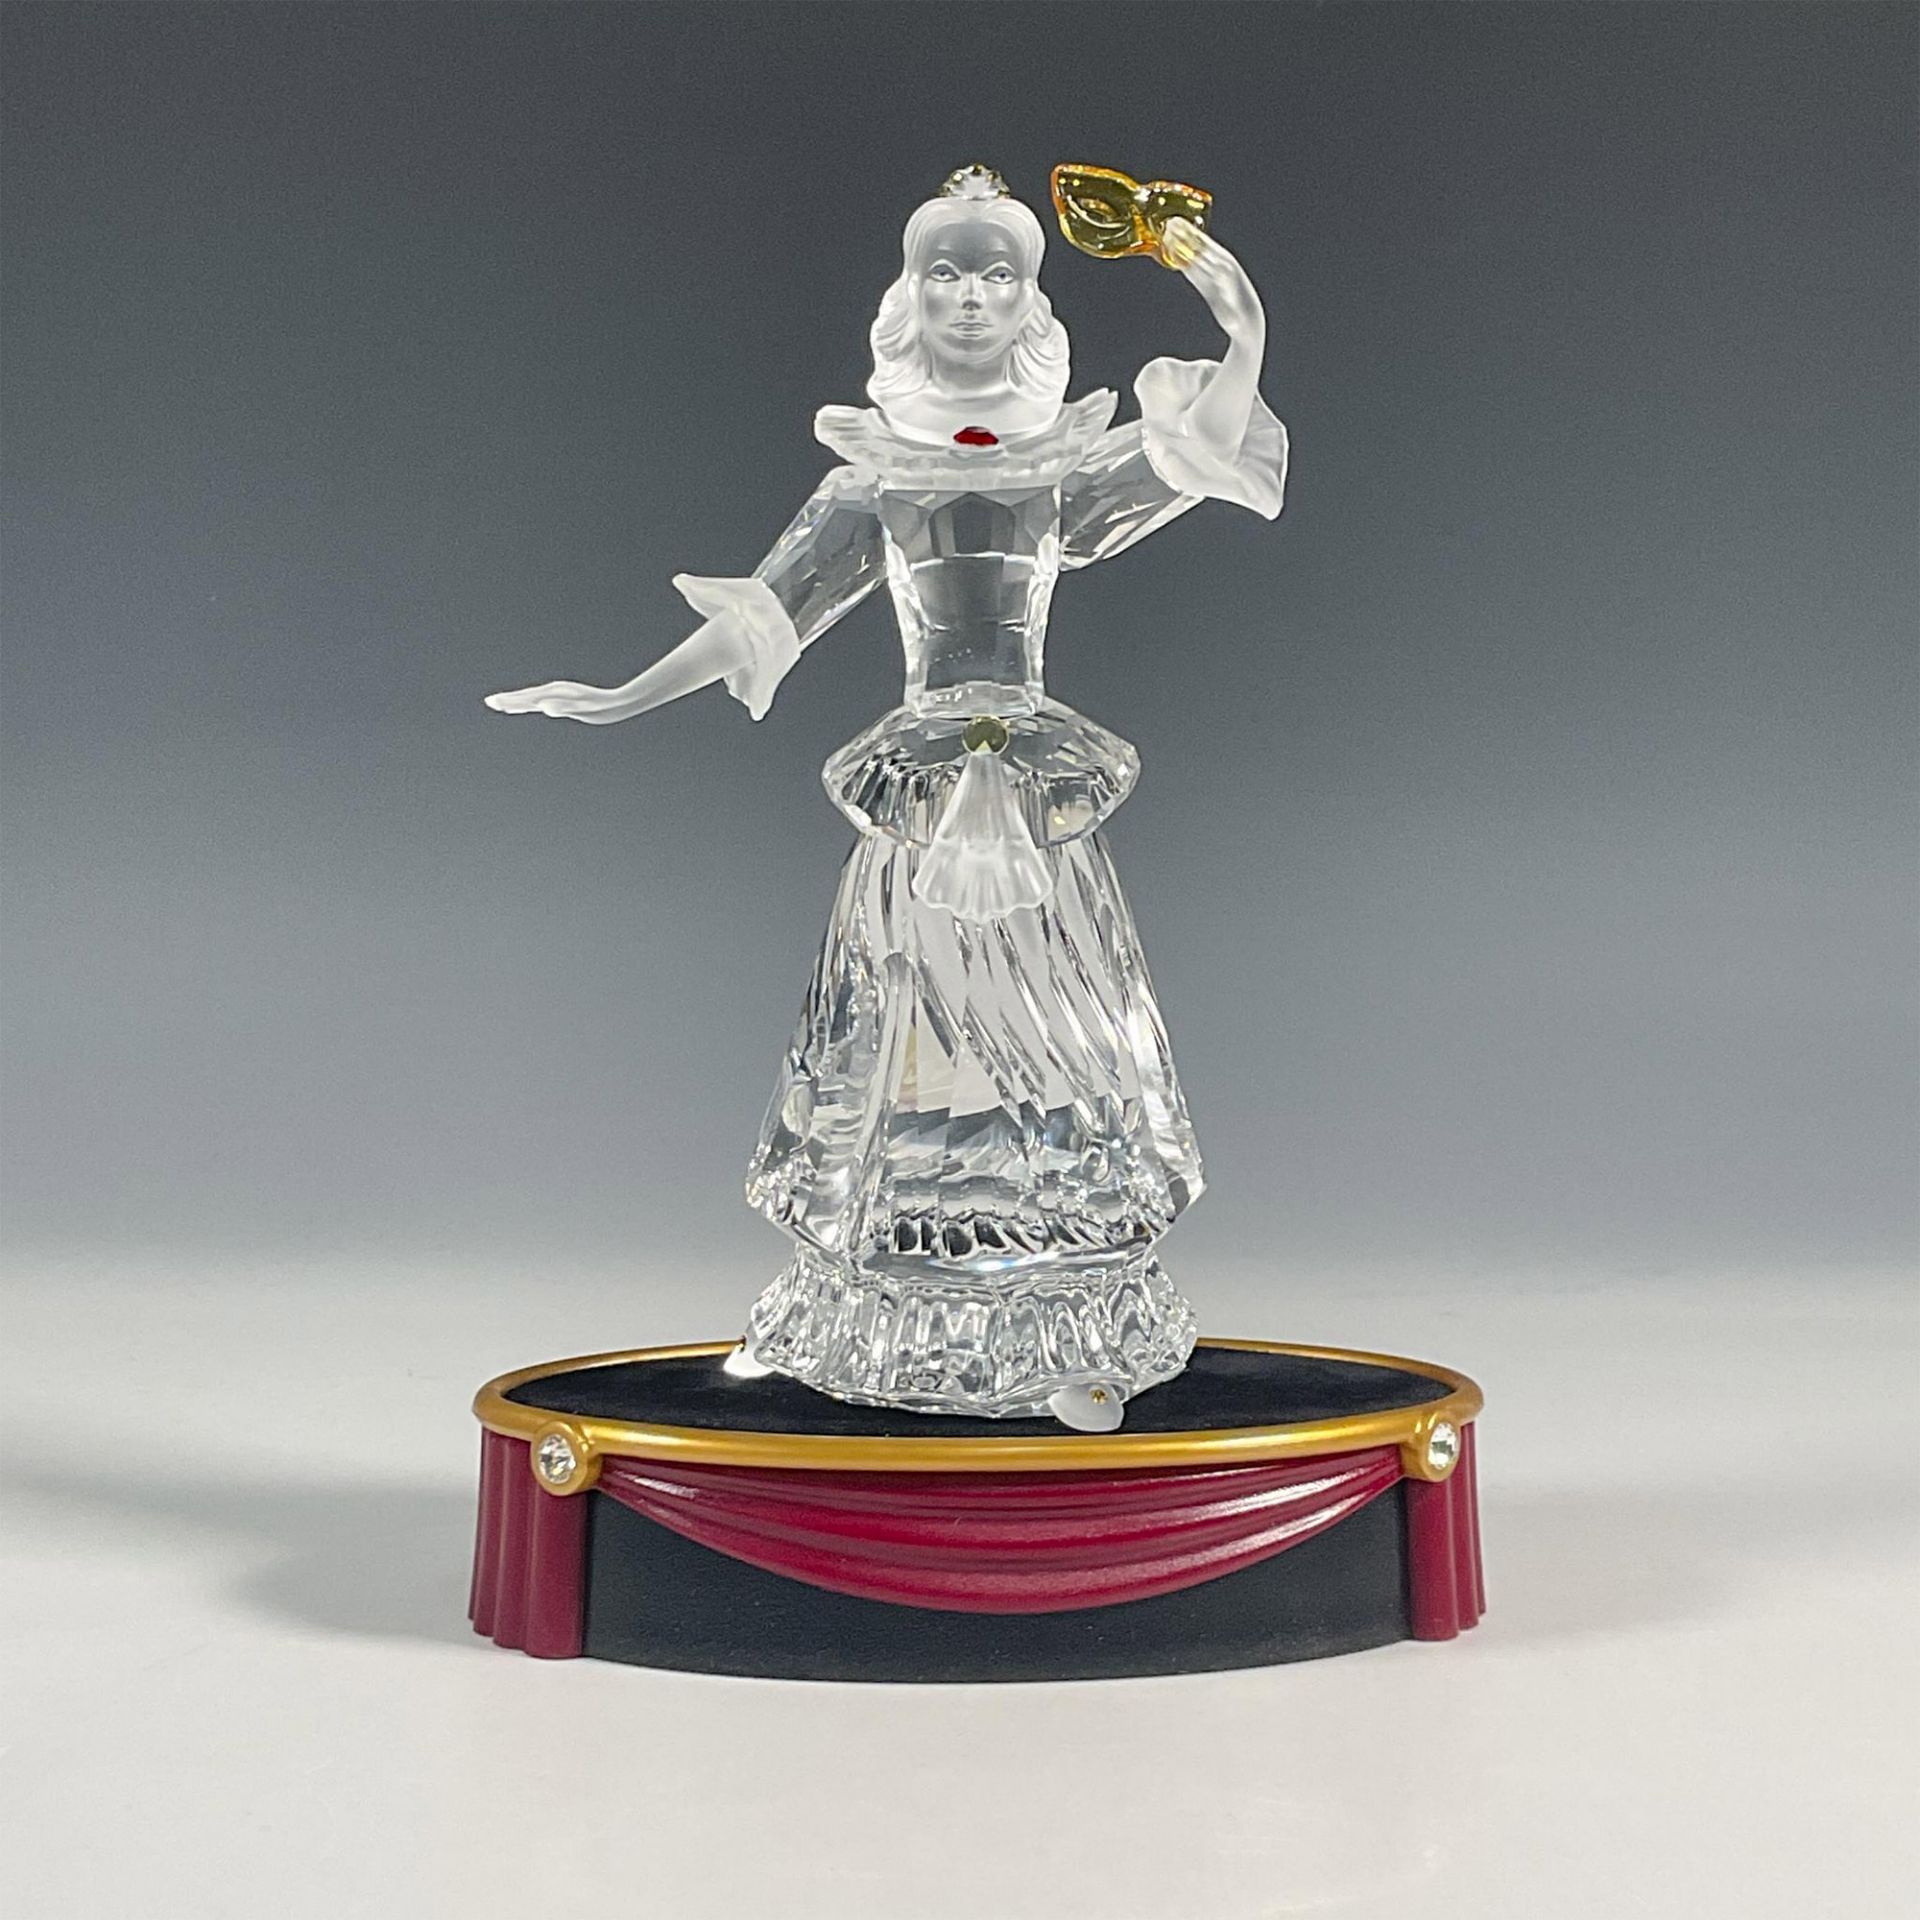 3pc Swarovski Crystal Figurine and Accessories, Columbine - Image 3 of 5